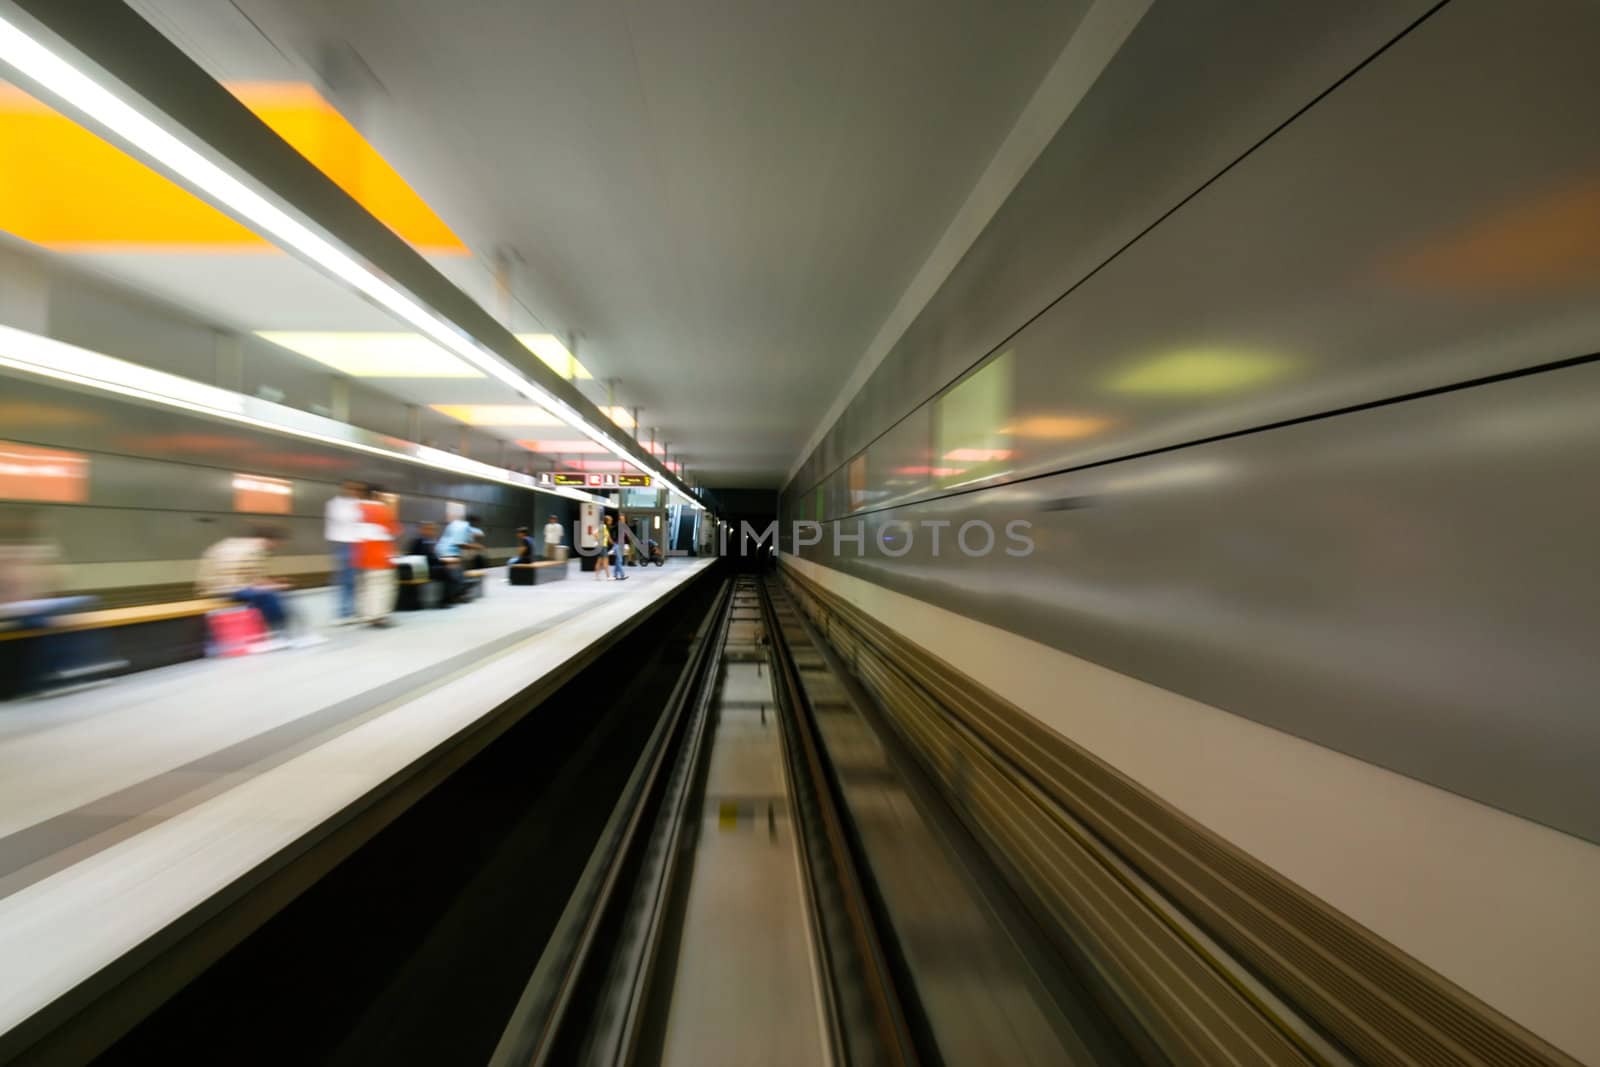 Motion blurred train station by svenmorris